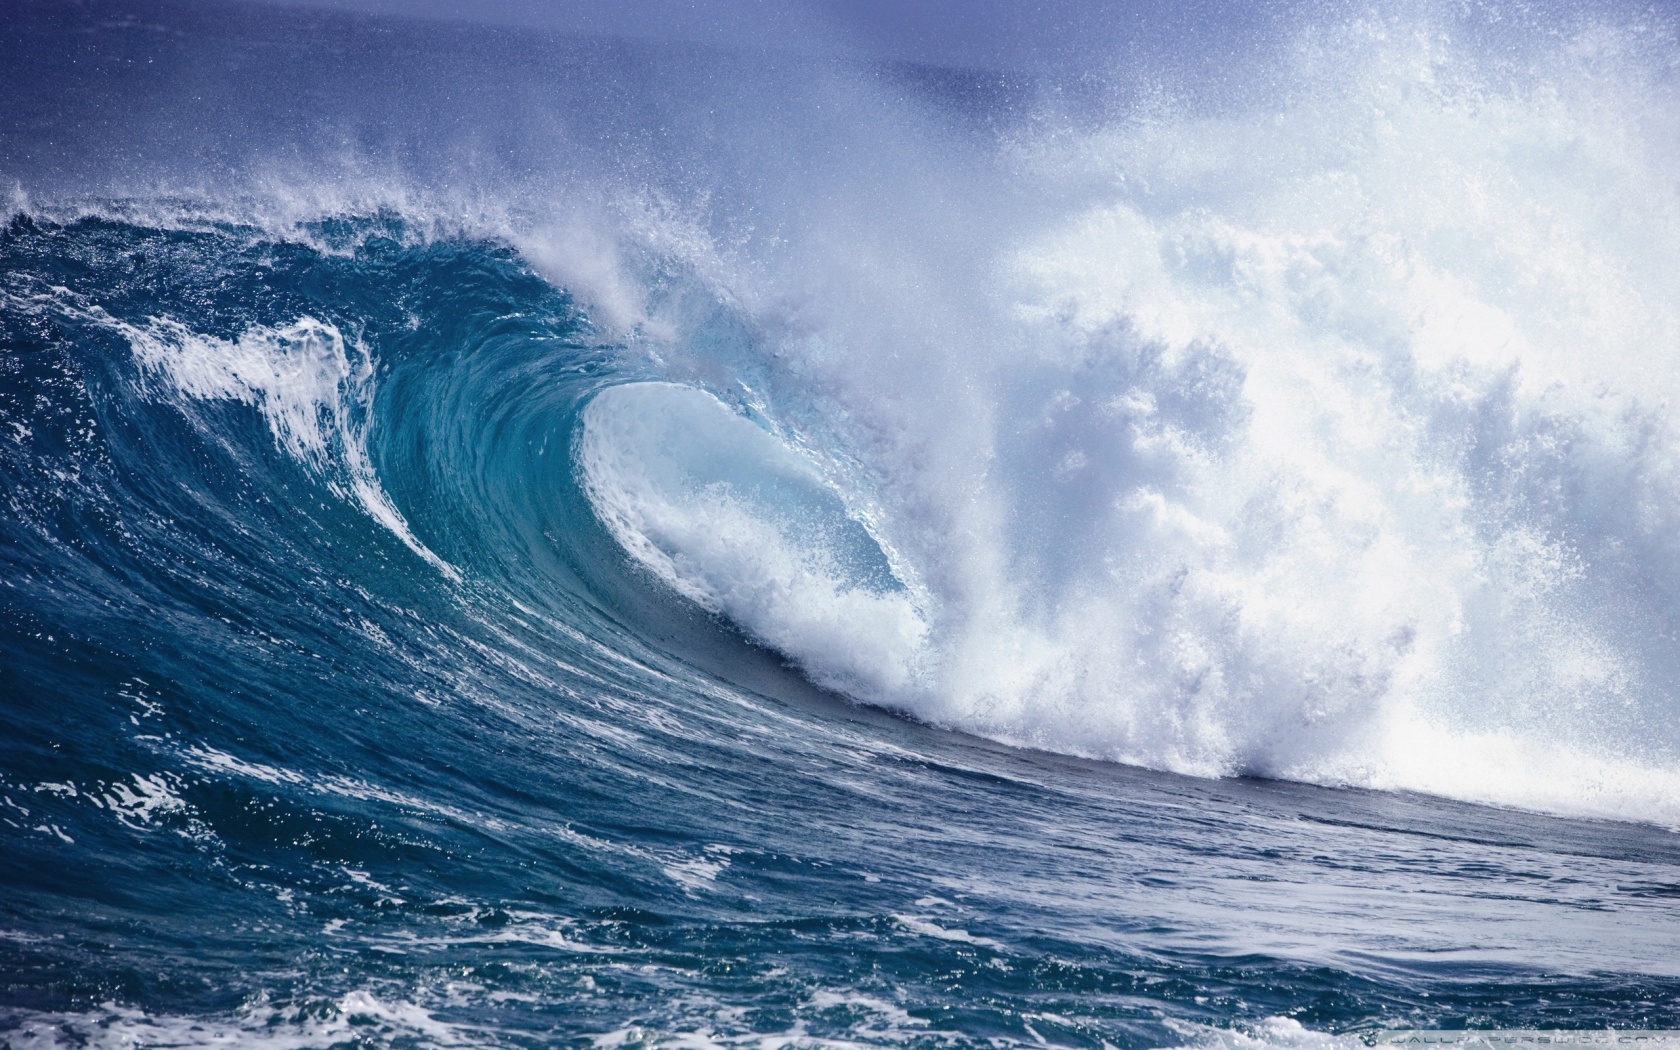 Ocean Waves Wallpaper X Free Images at Clkercom